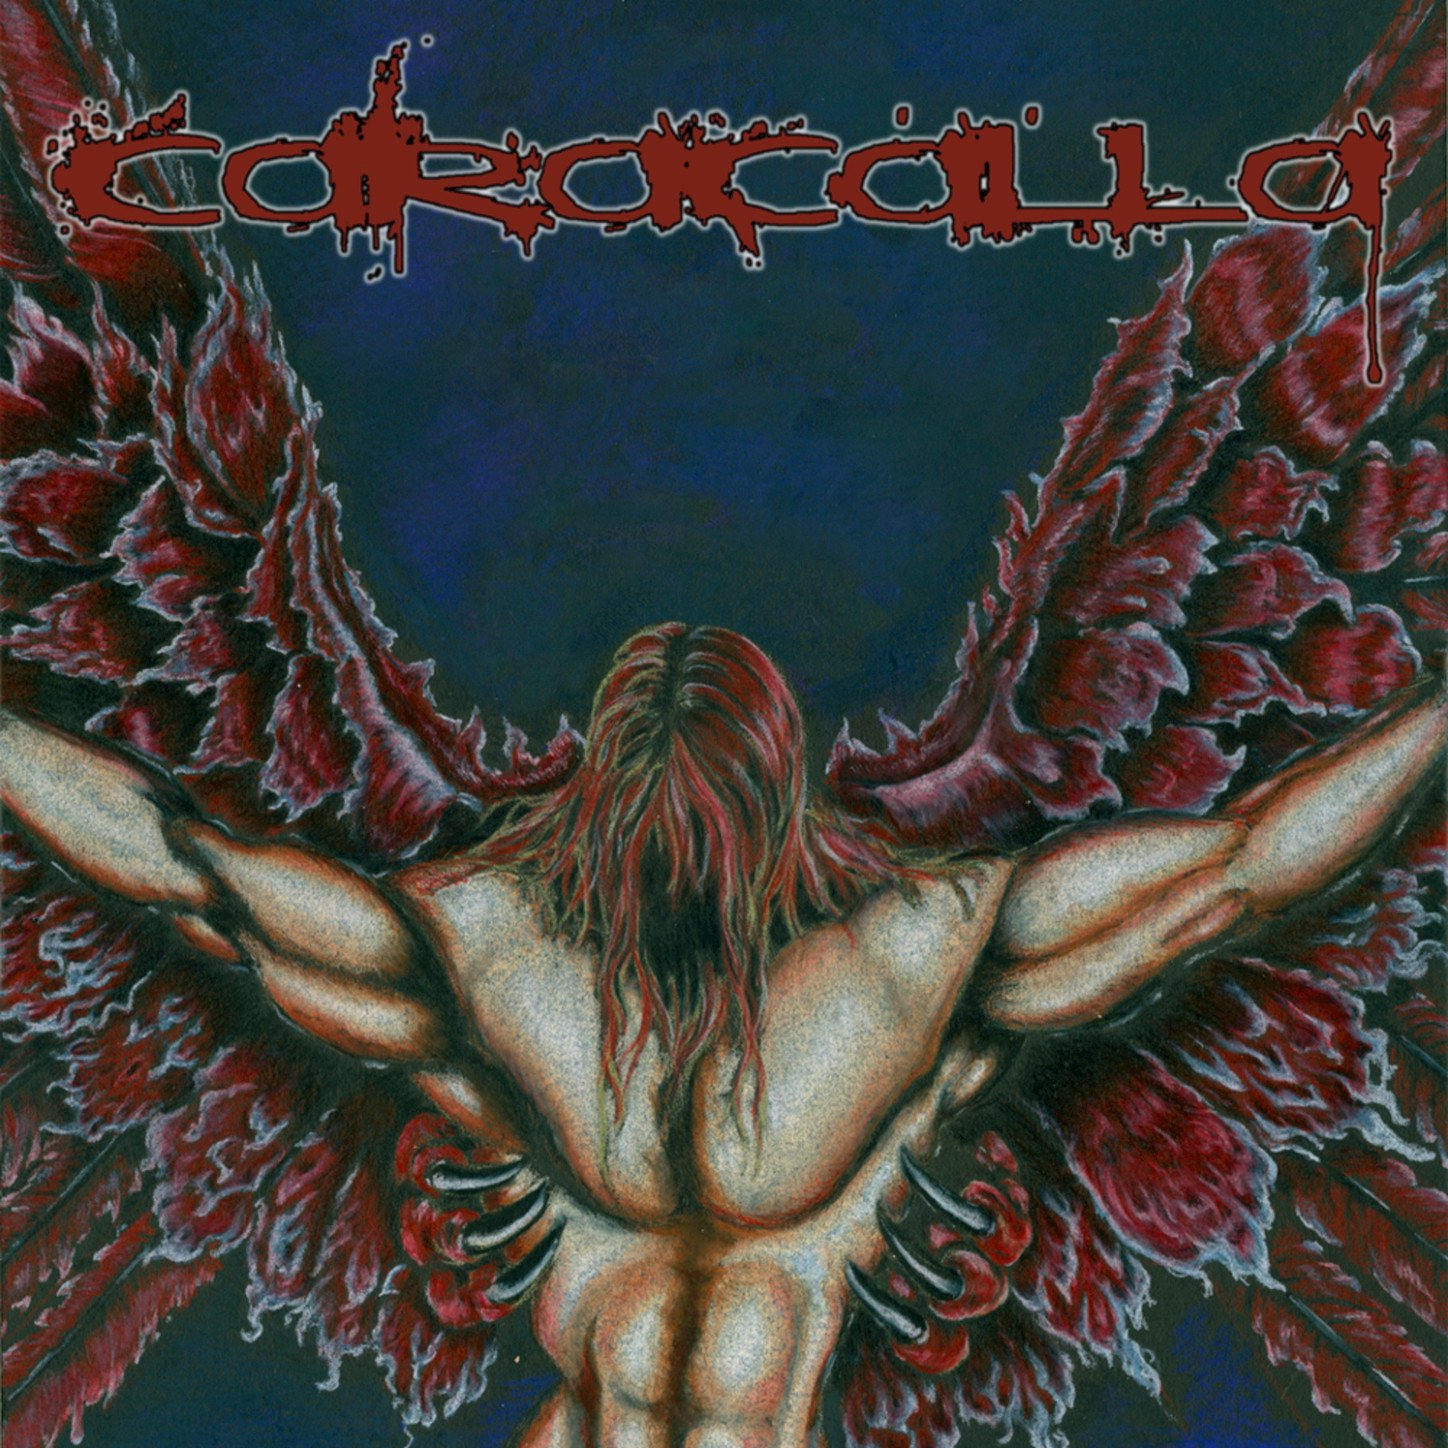 Caracalla - Blood Eagle (2015)